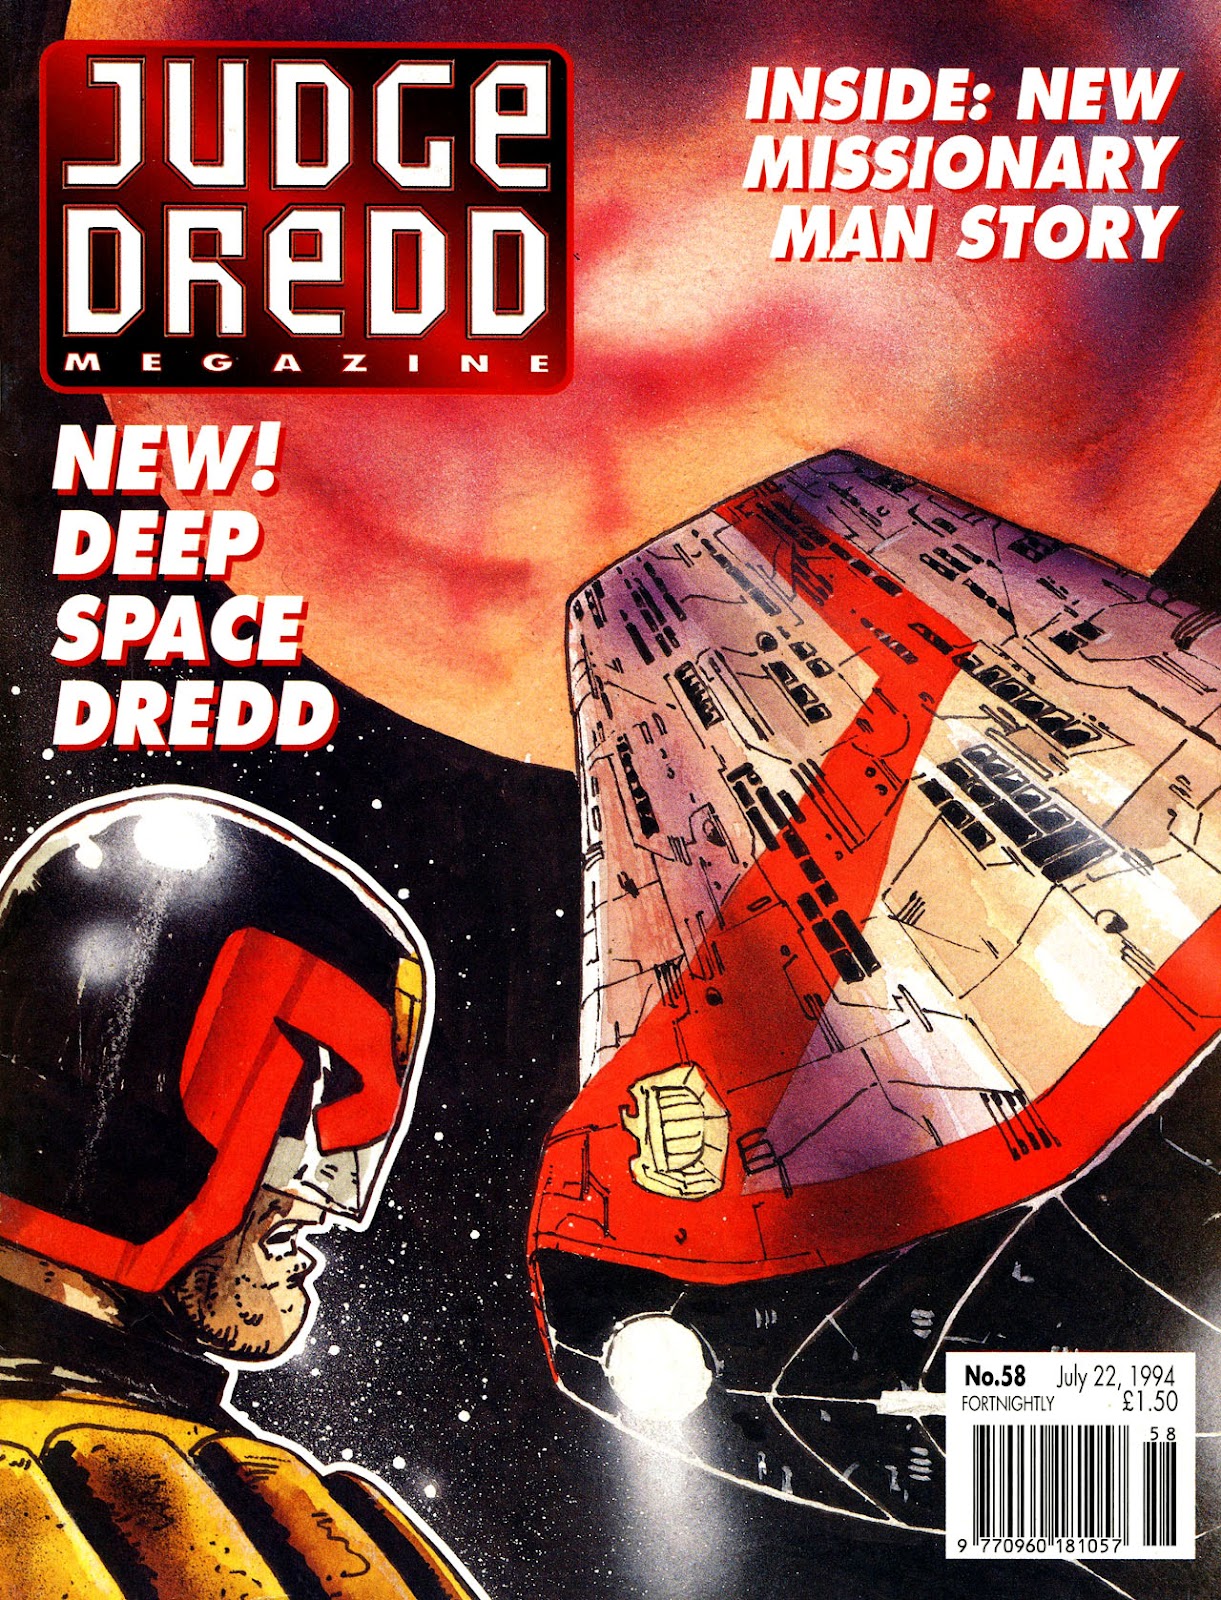 Judge Dredd: The Megazine (vol. 2) issue 58 - Page 1